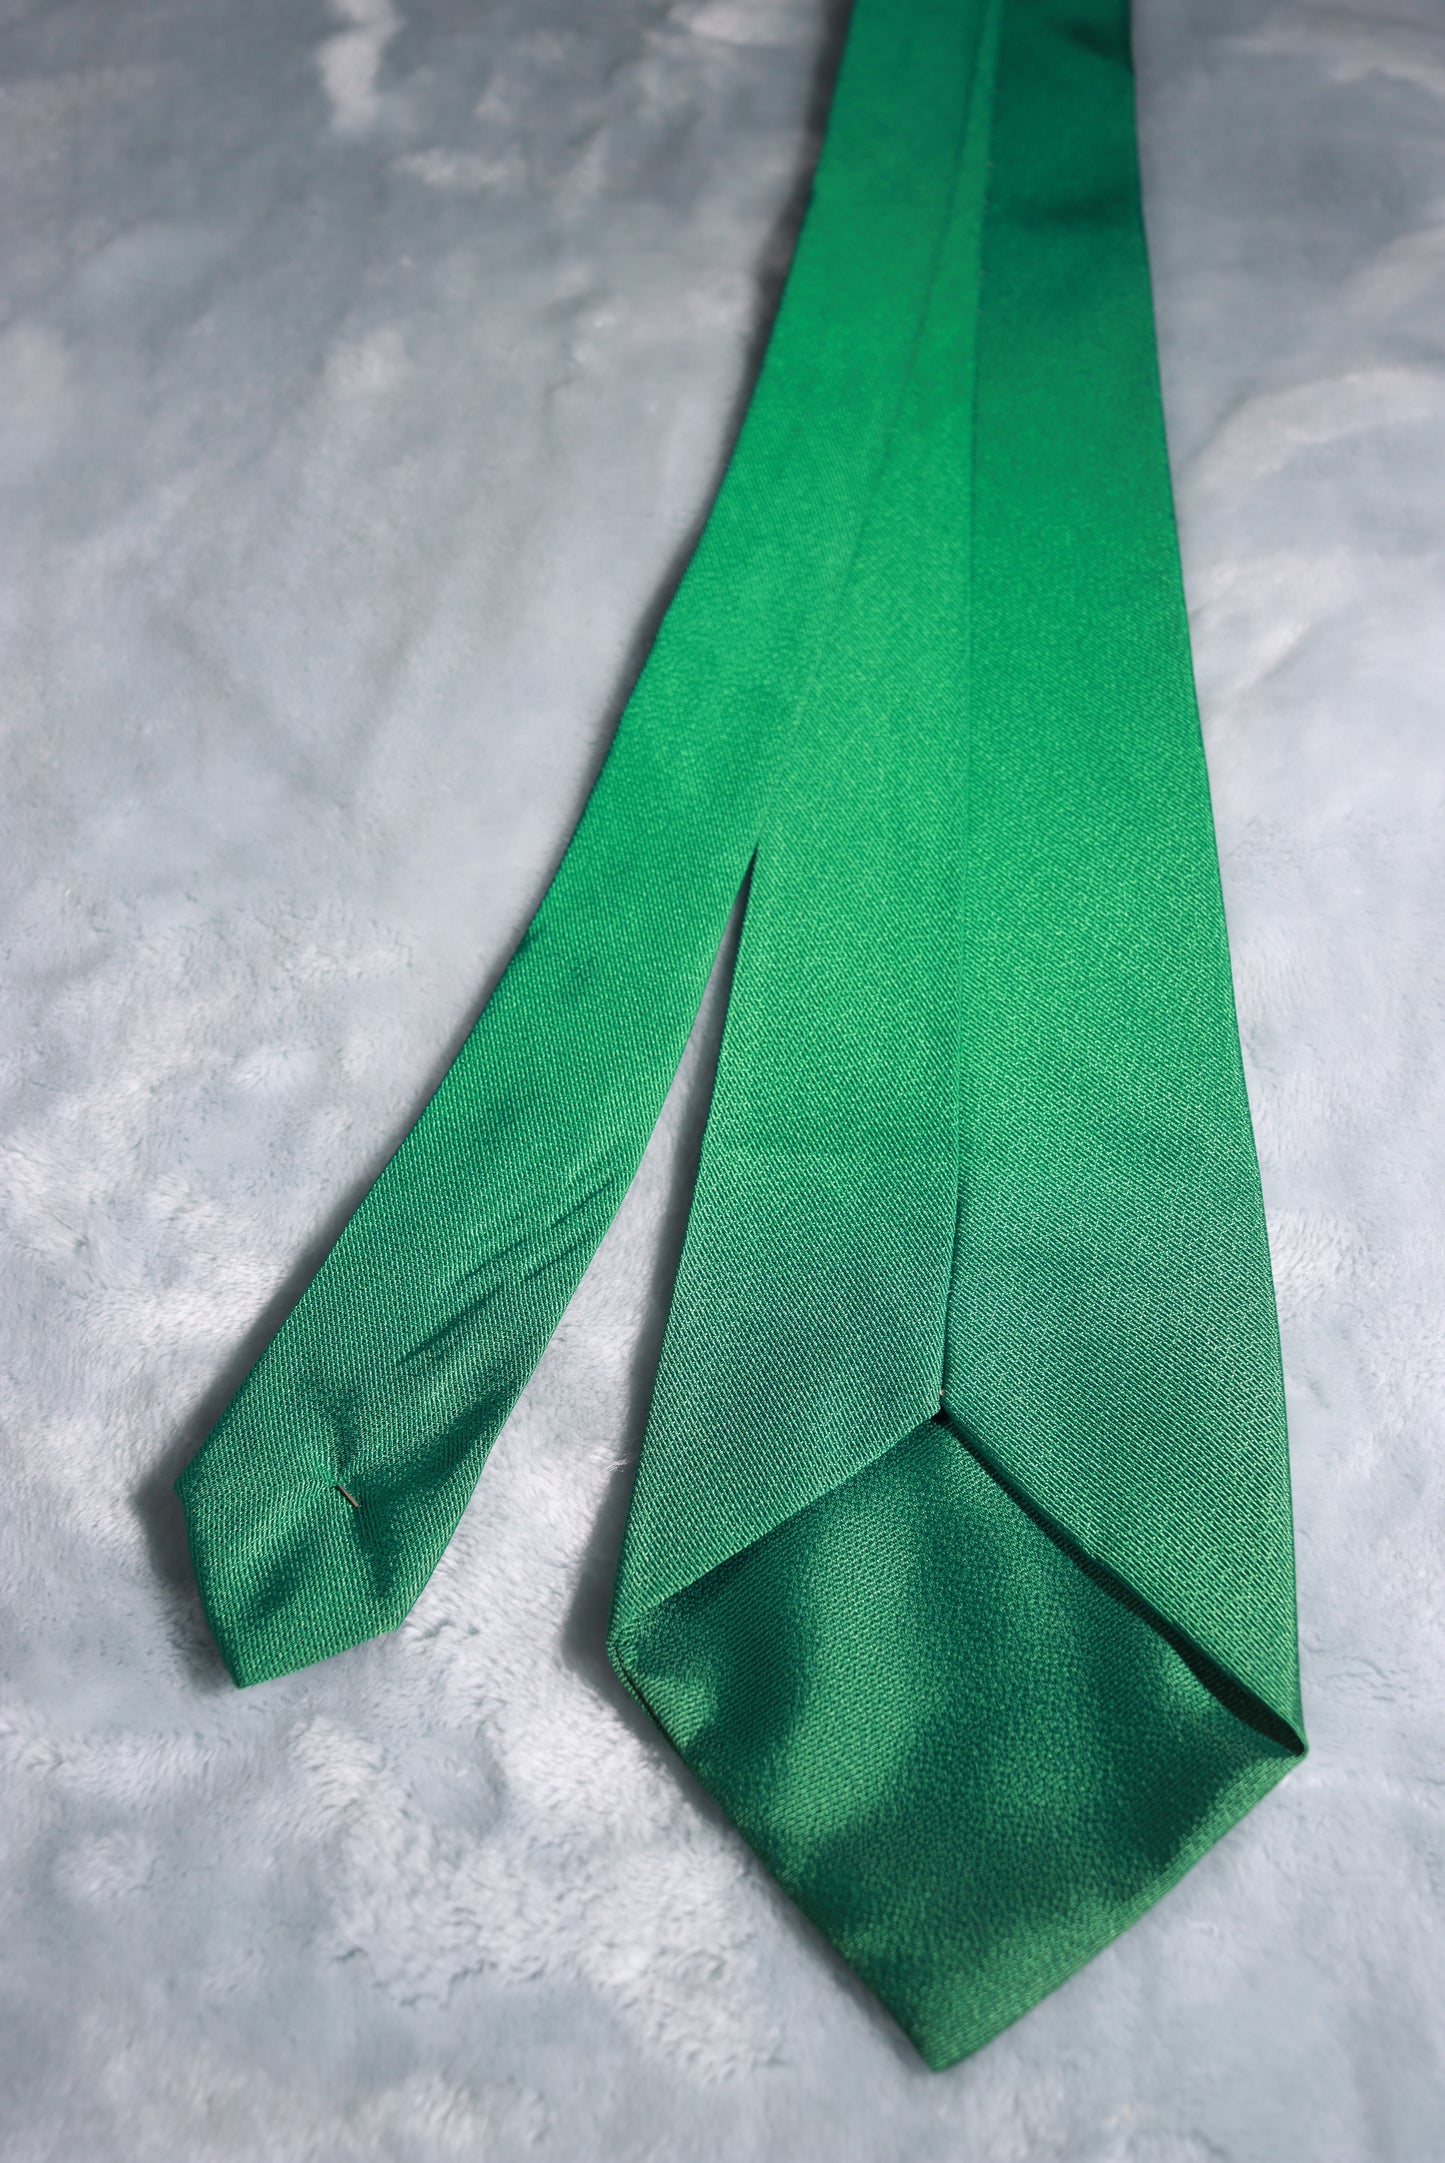 Vintage Green Irish St. Patrick's Day Tie 1960s/70s